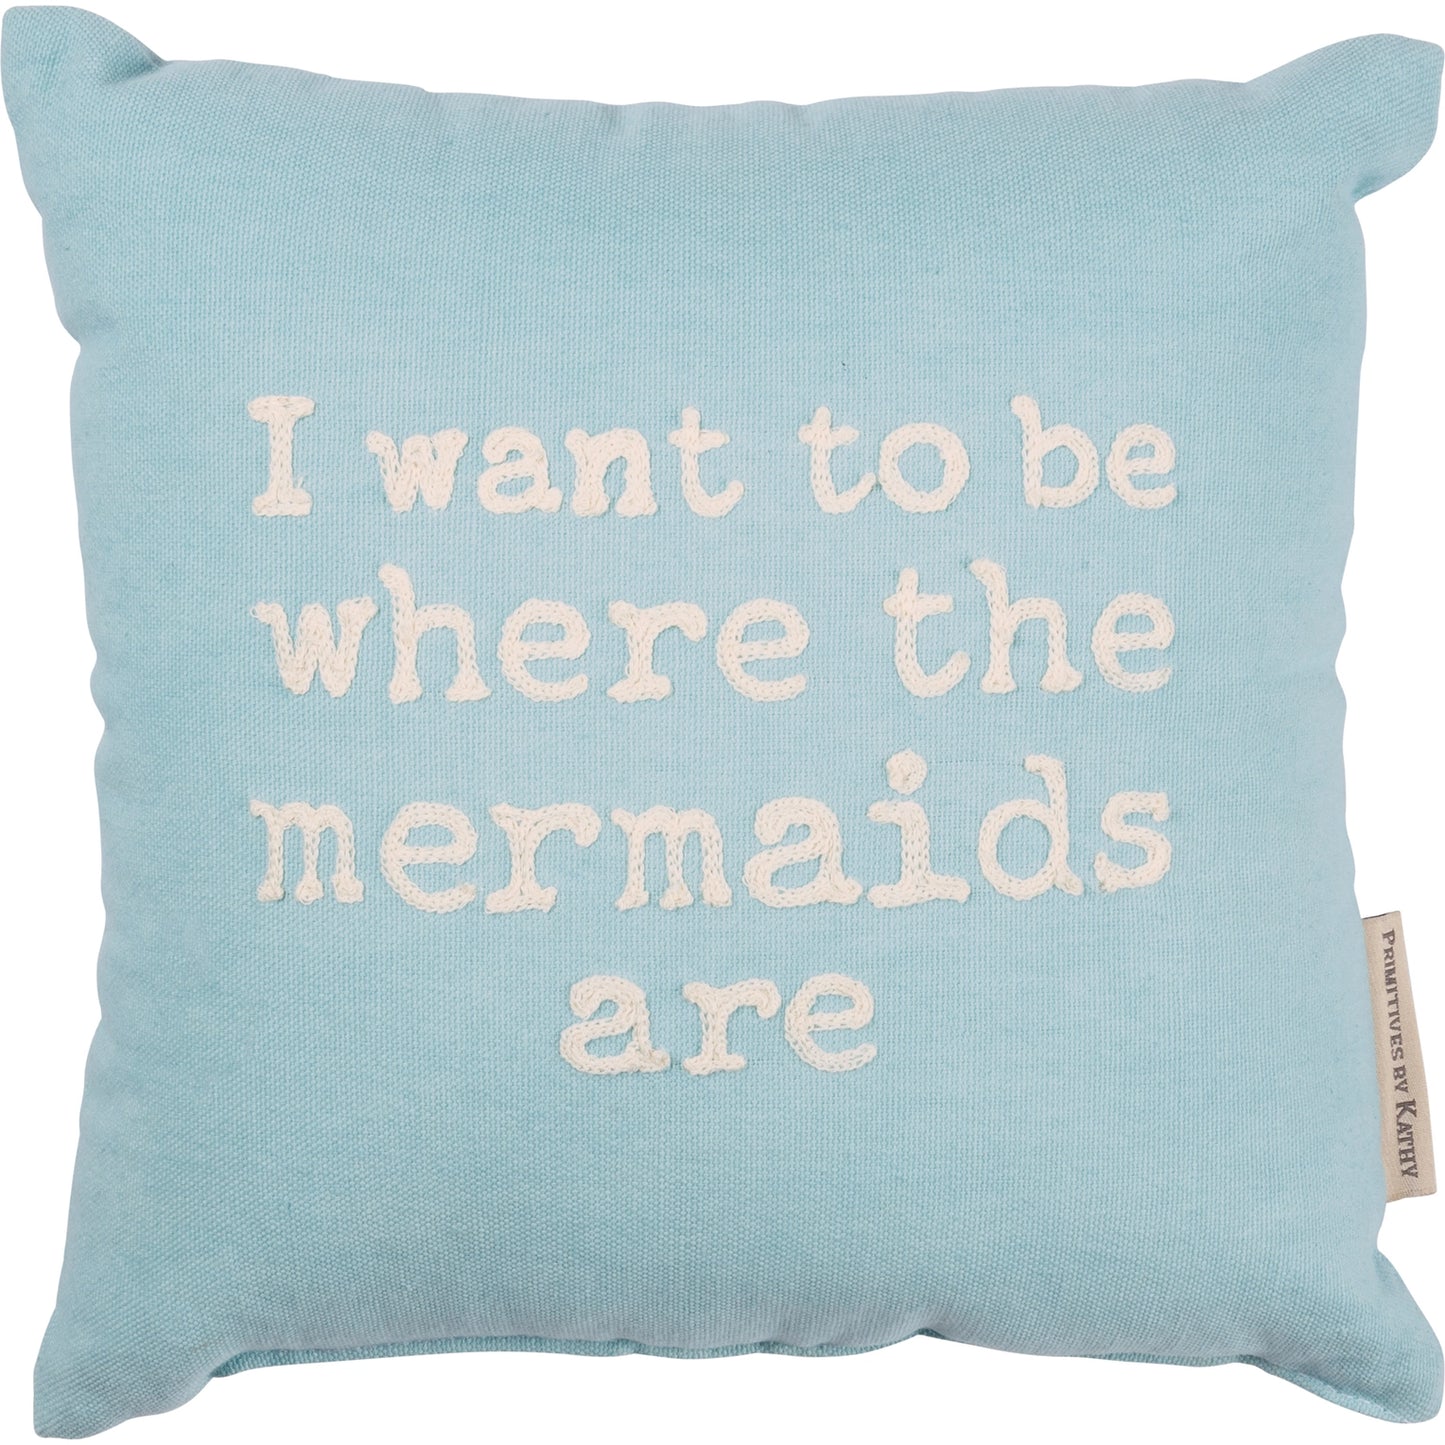 Mermaids Pillow